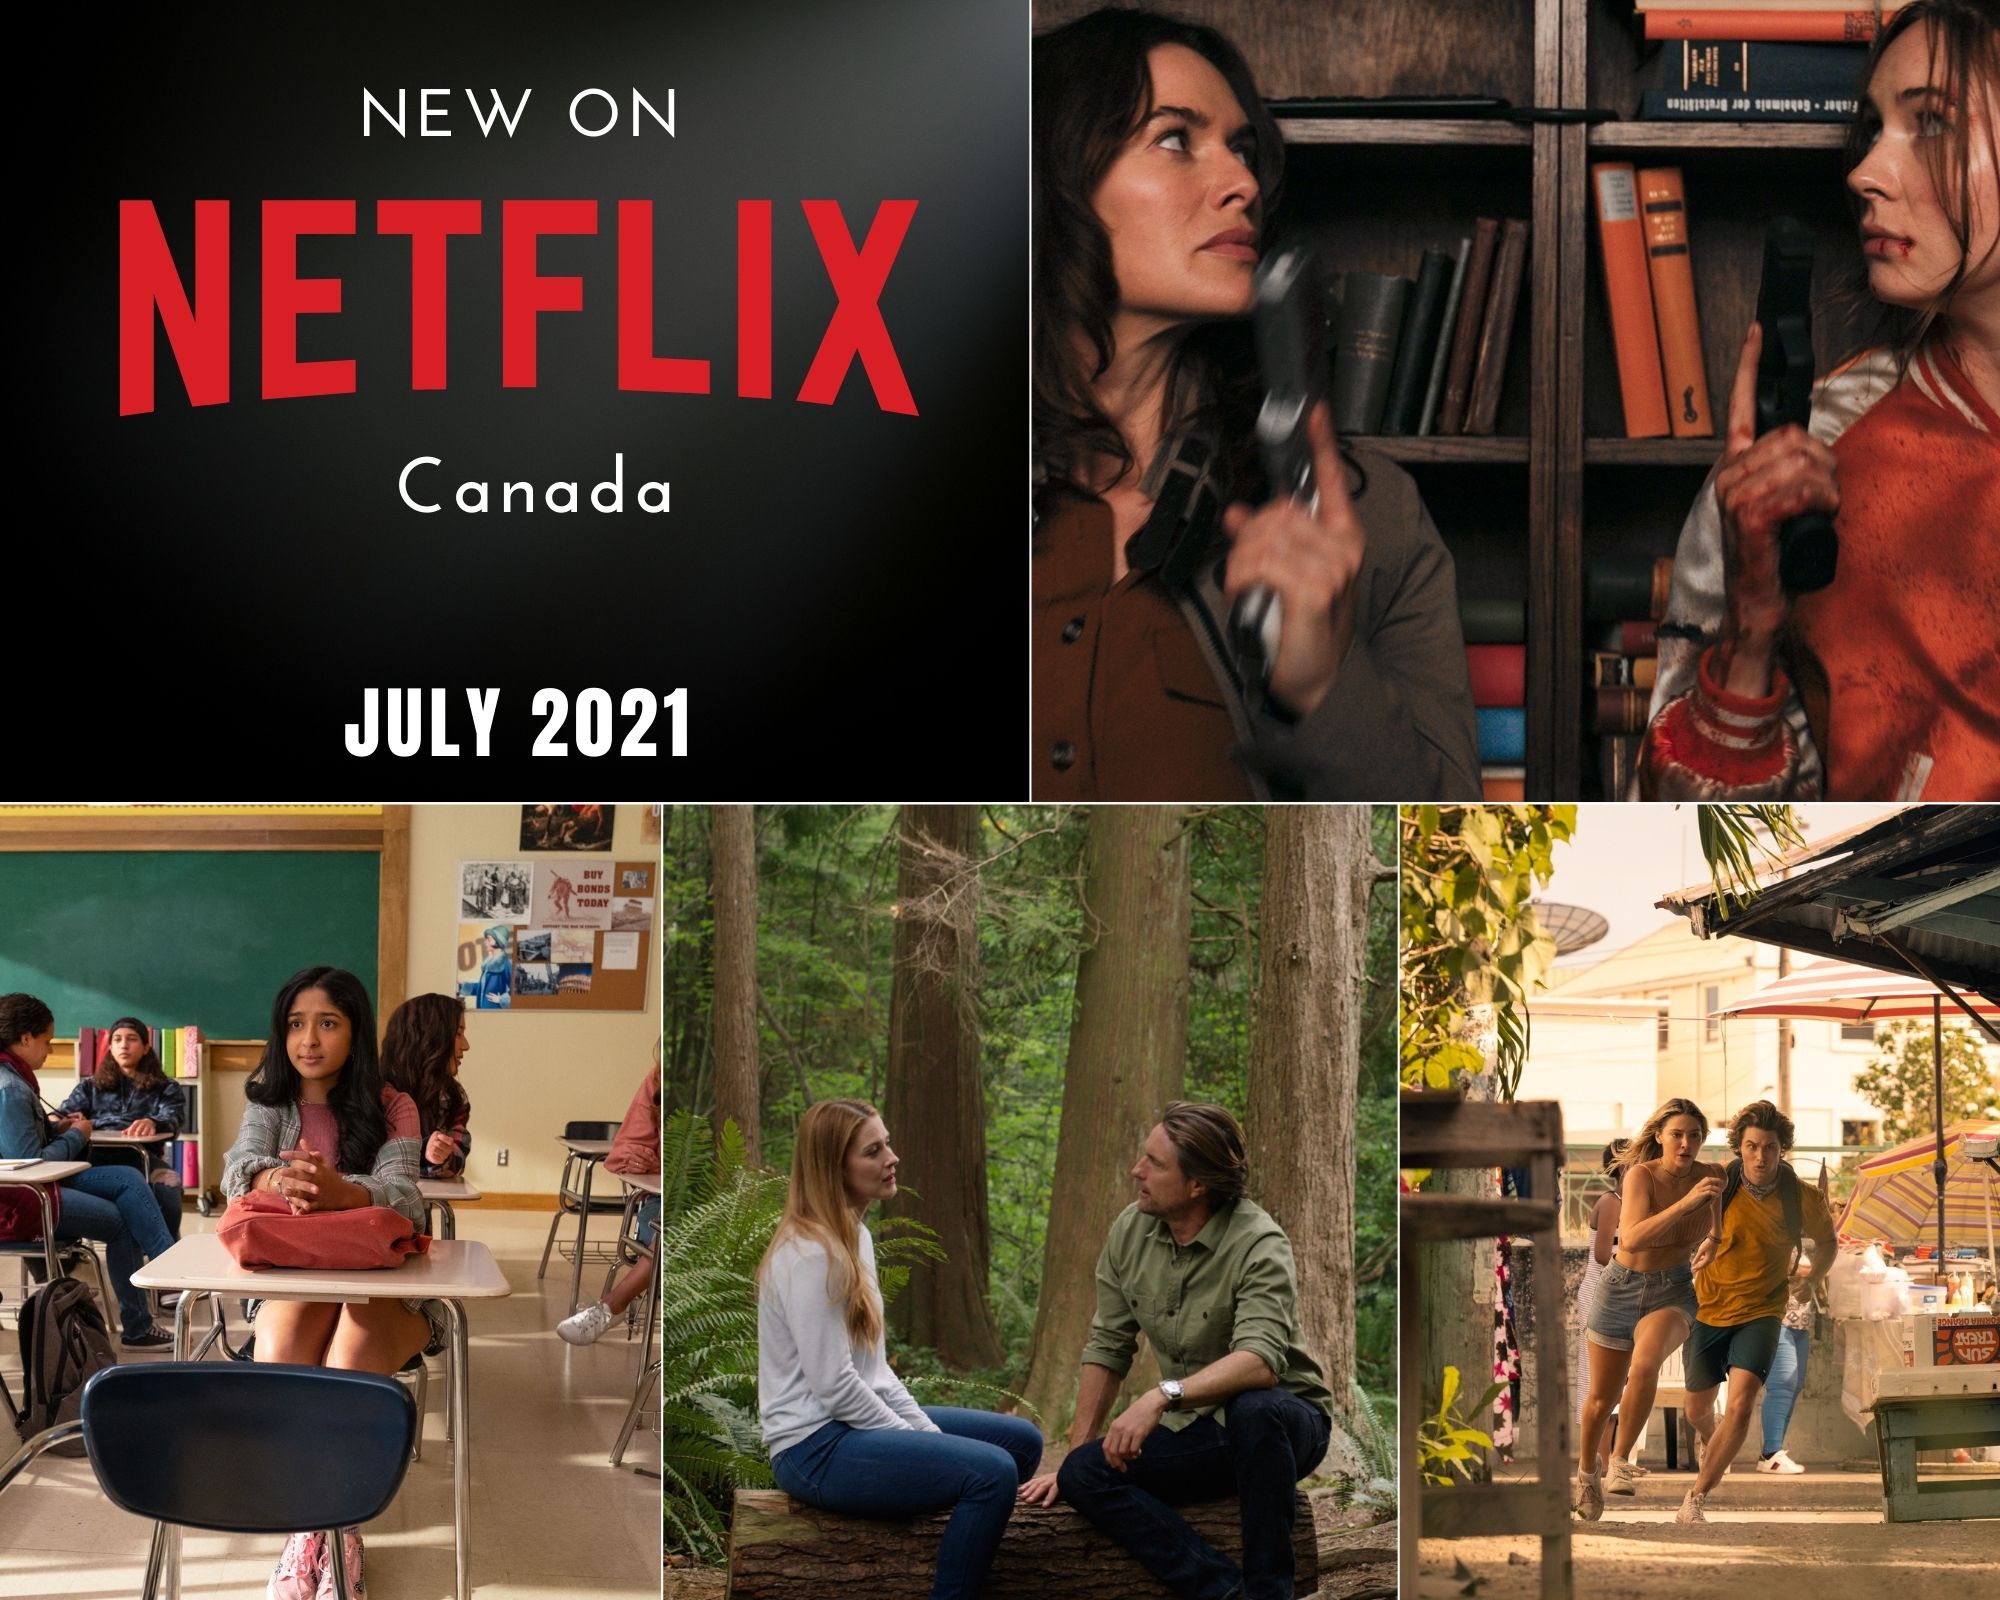 New on Netflix Canada